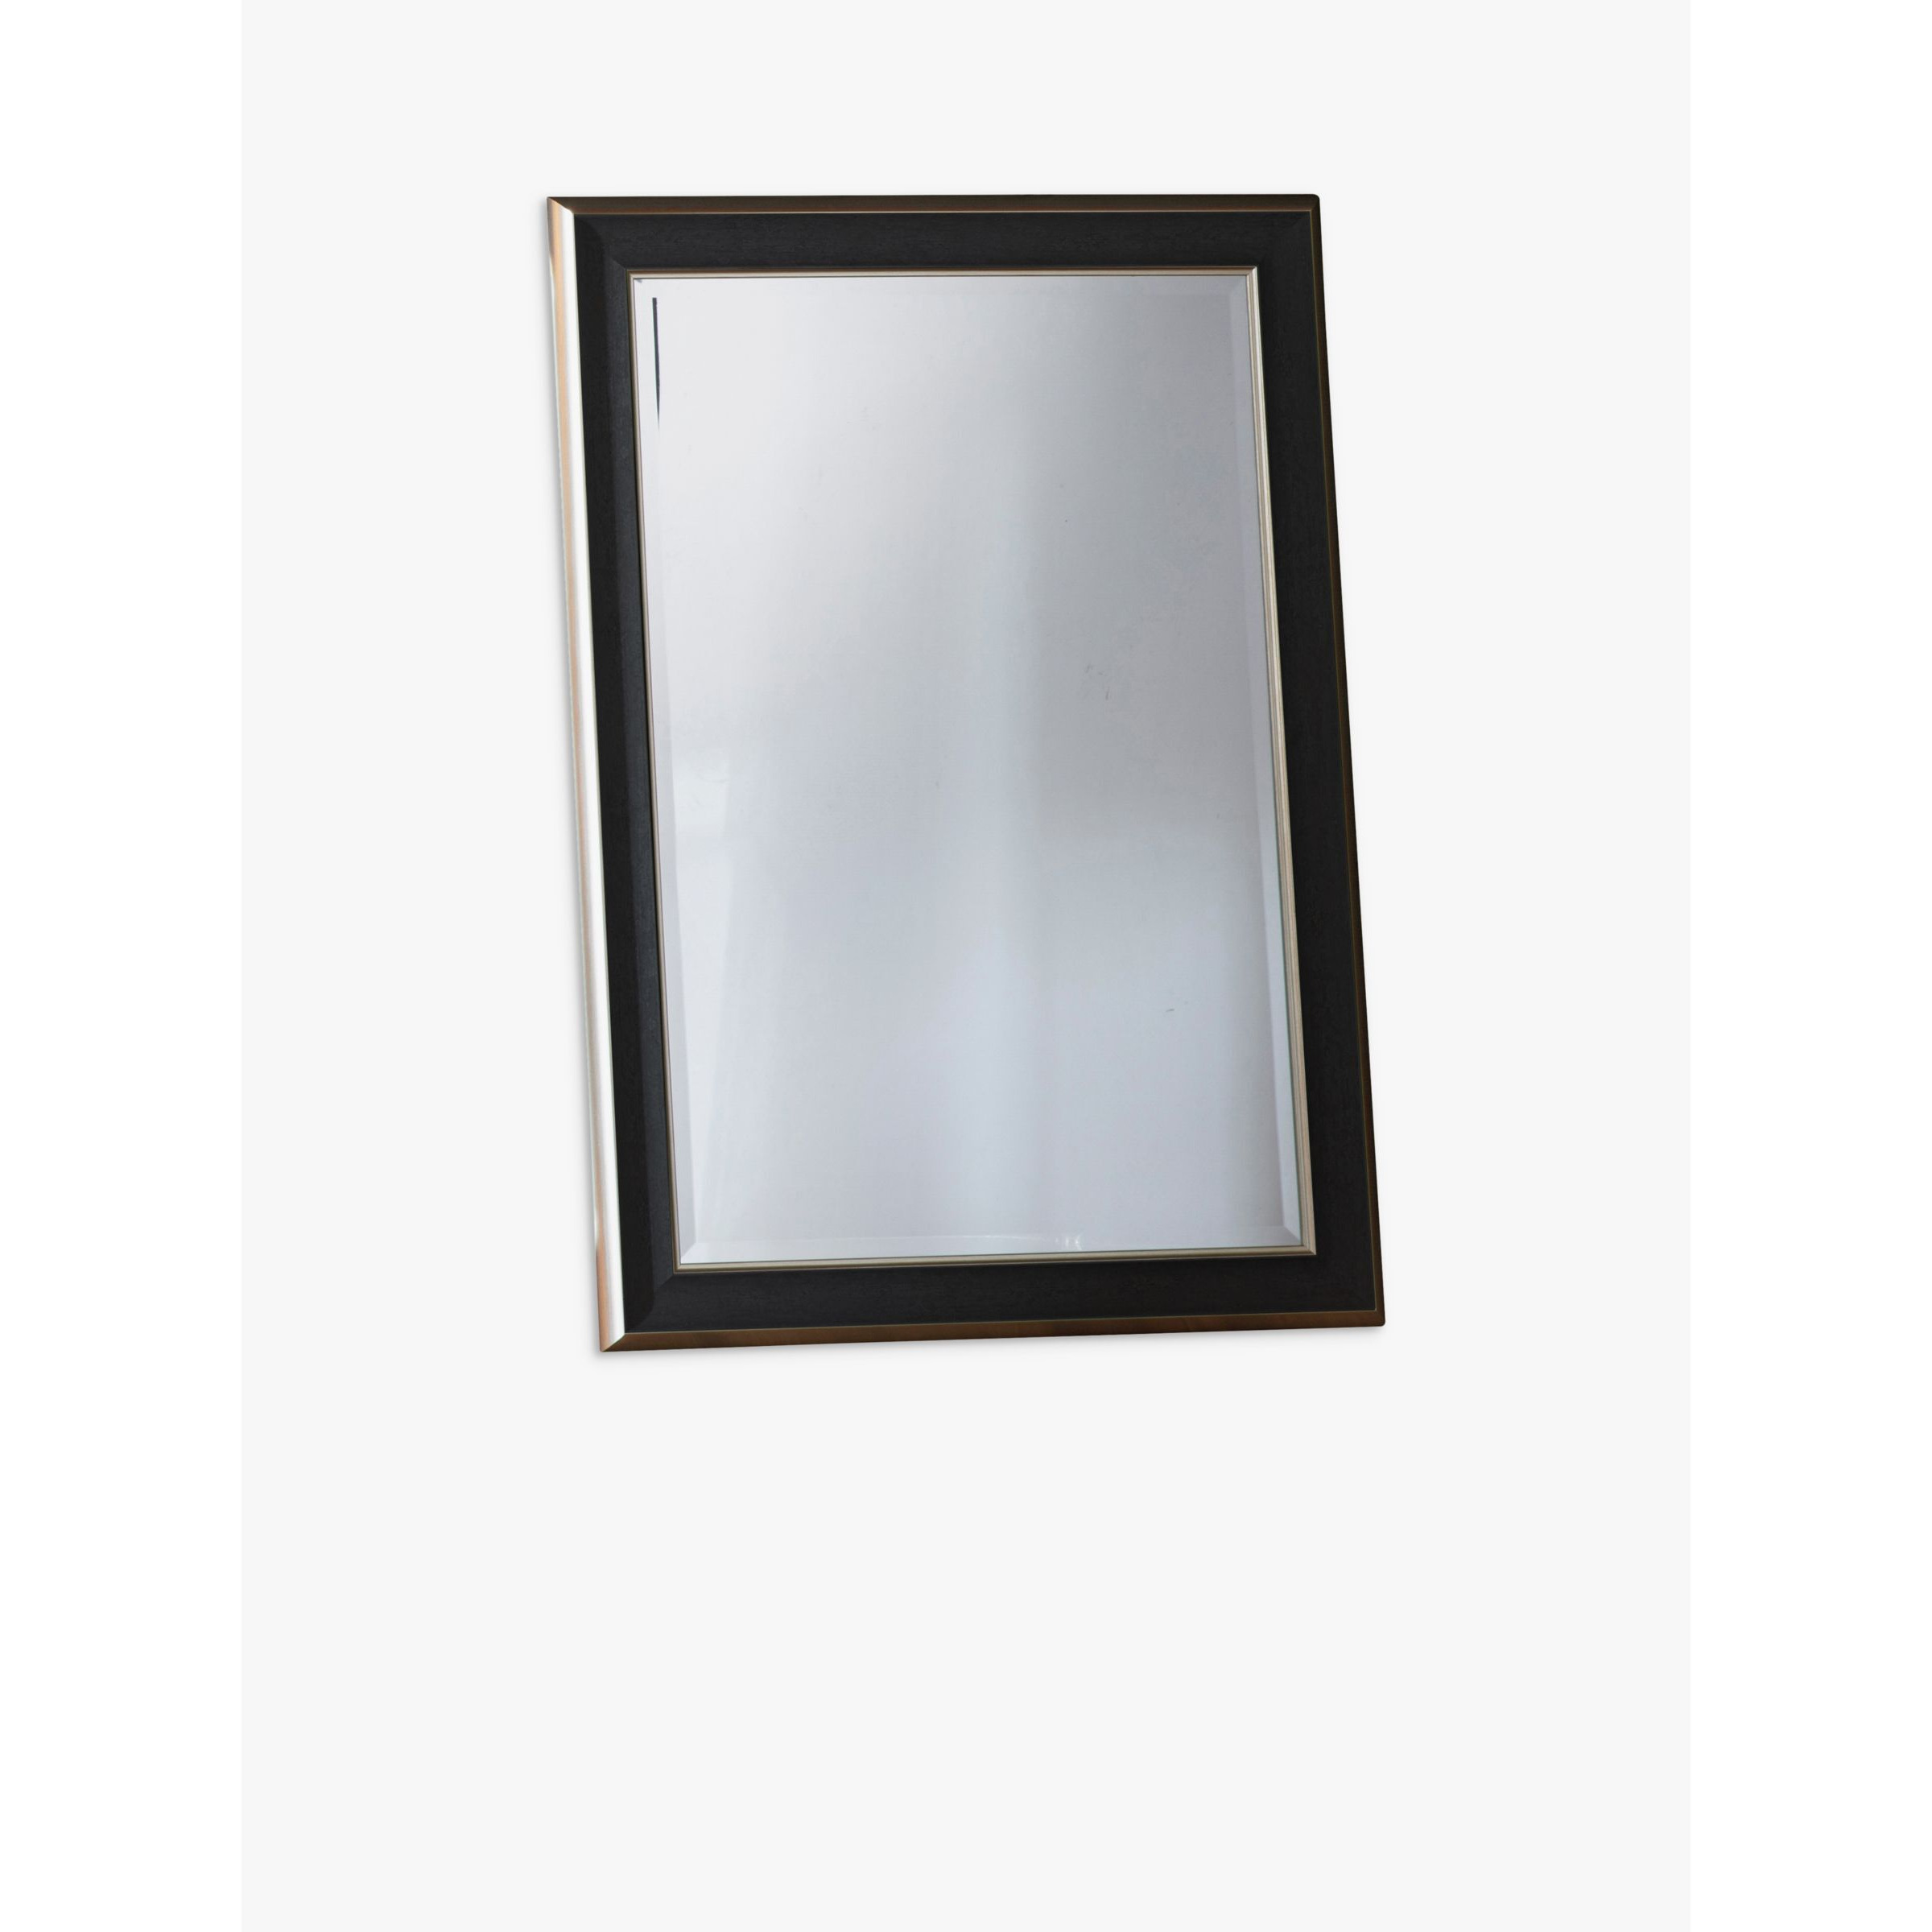 Gallery Direct Freeman Rectangular Mirror, 105 x 75cm - image 1